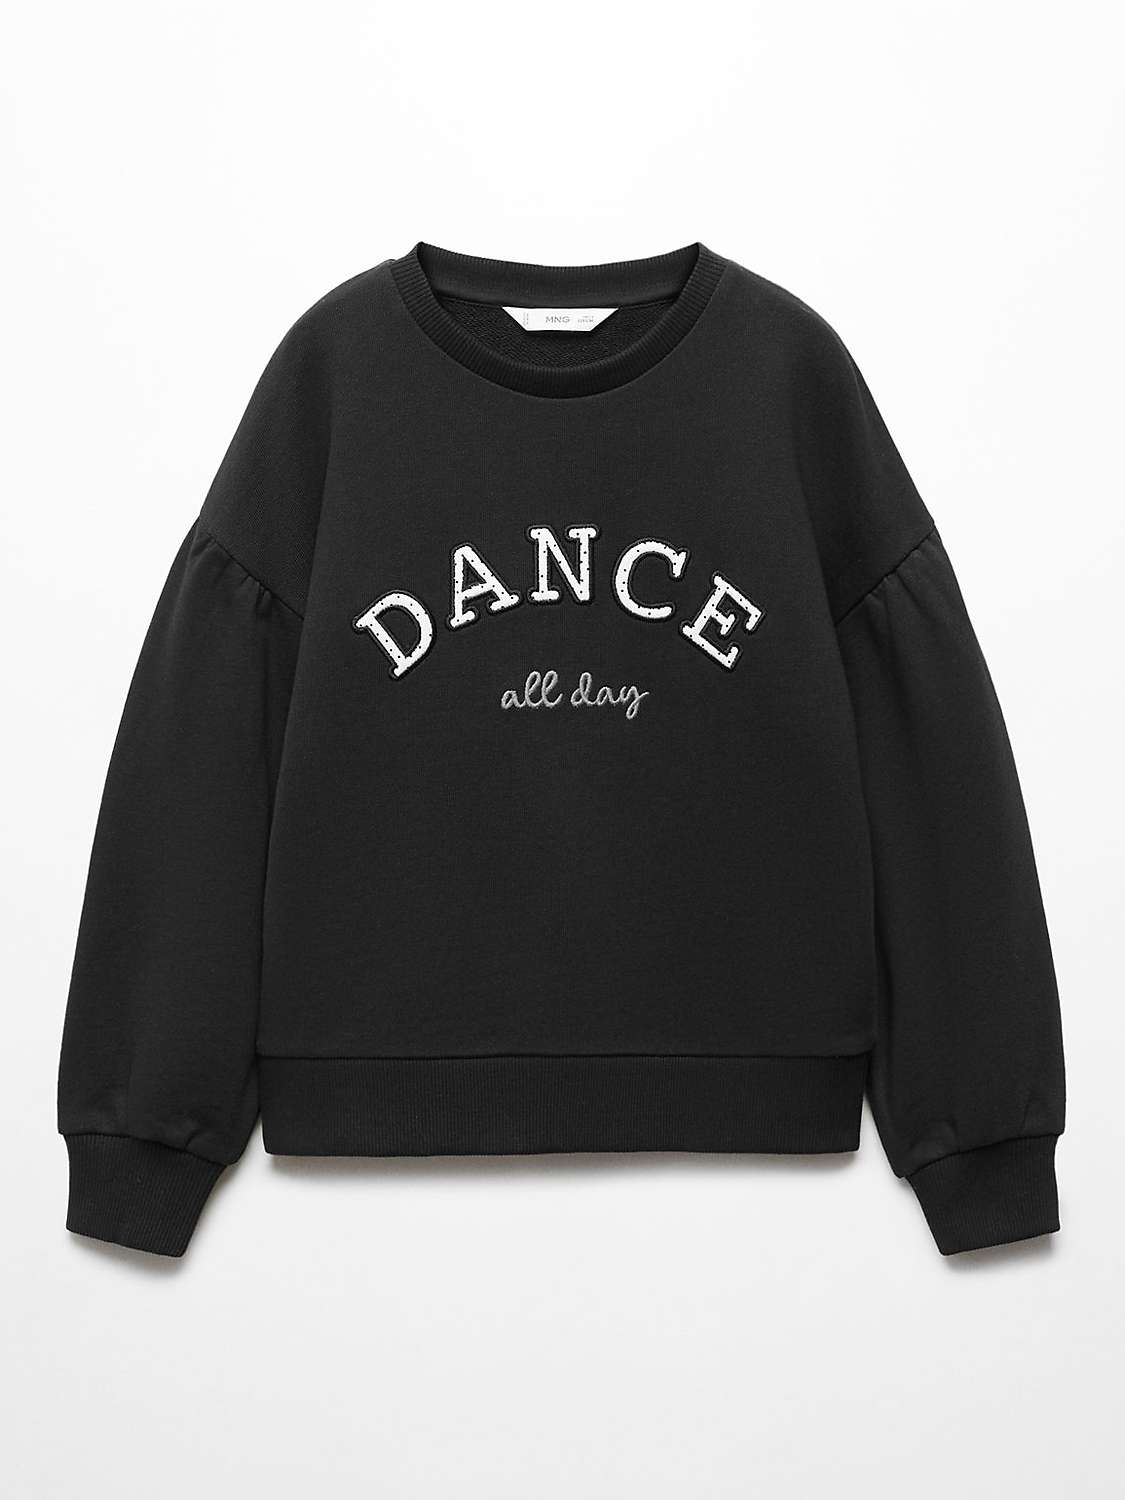 Buy Mango Kids' Dance All Day Sweatshirt, Black Online at johnlewis.com